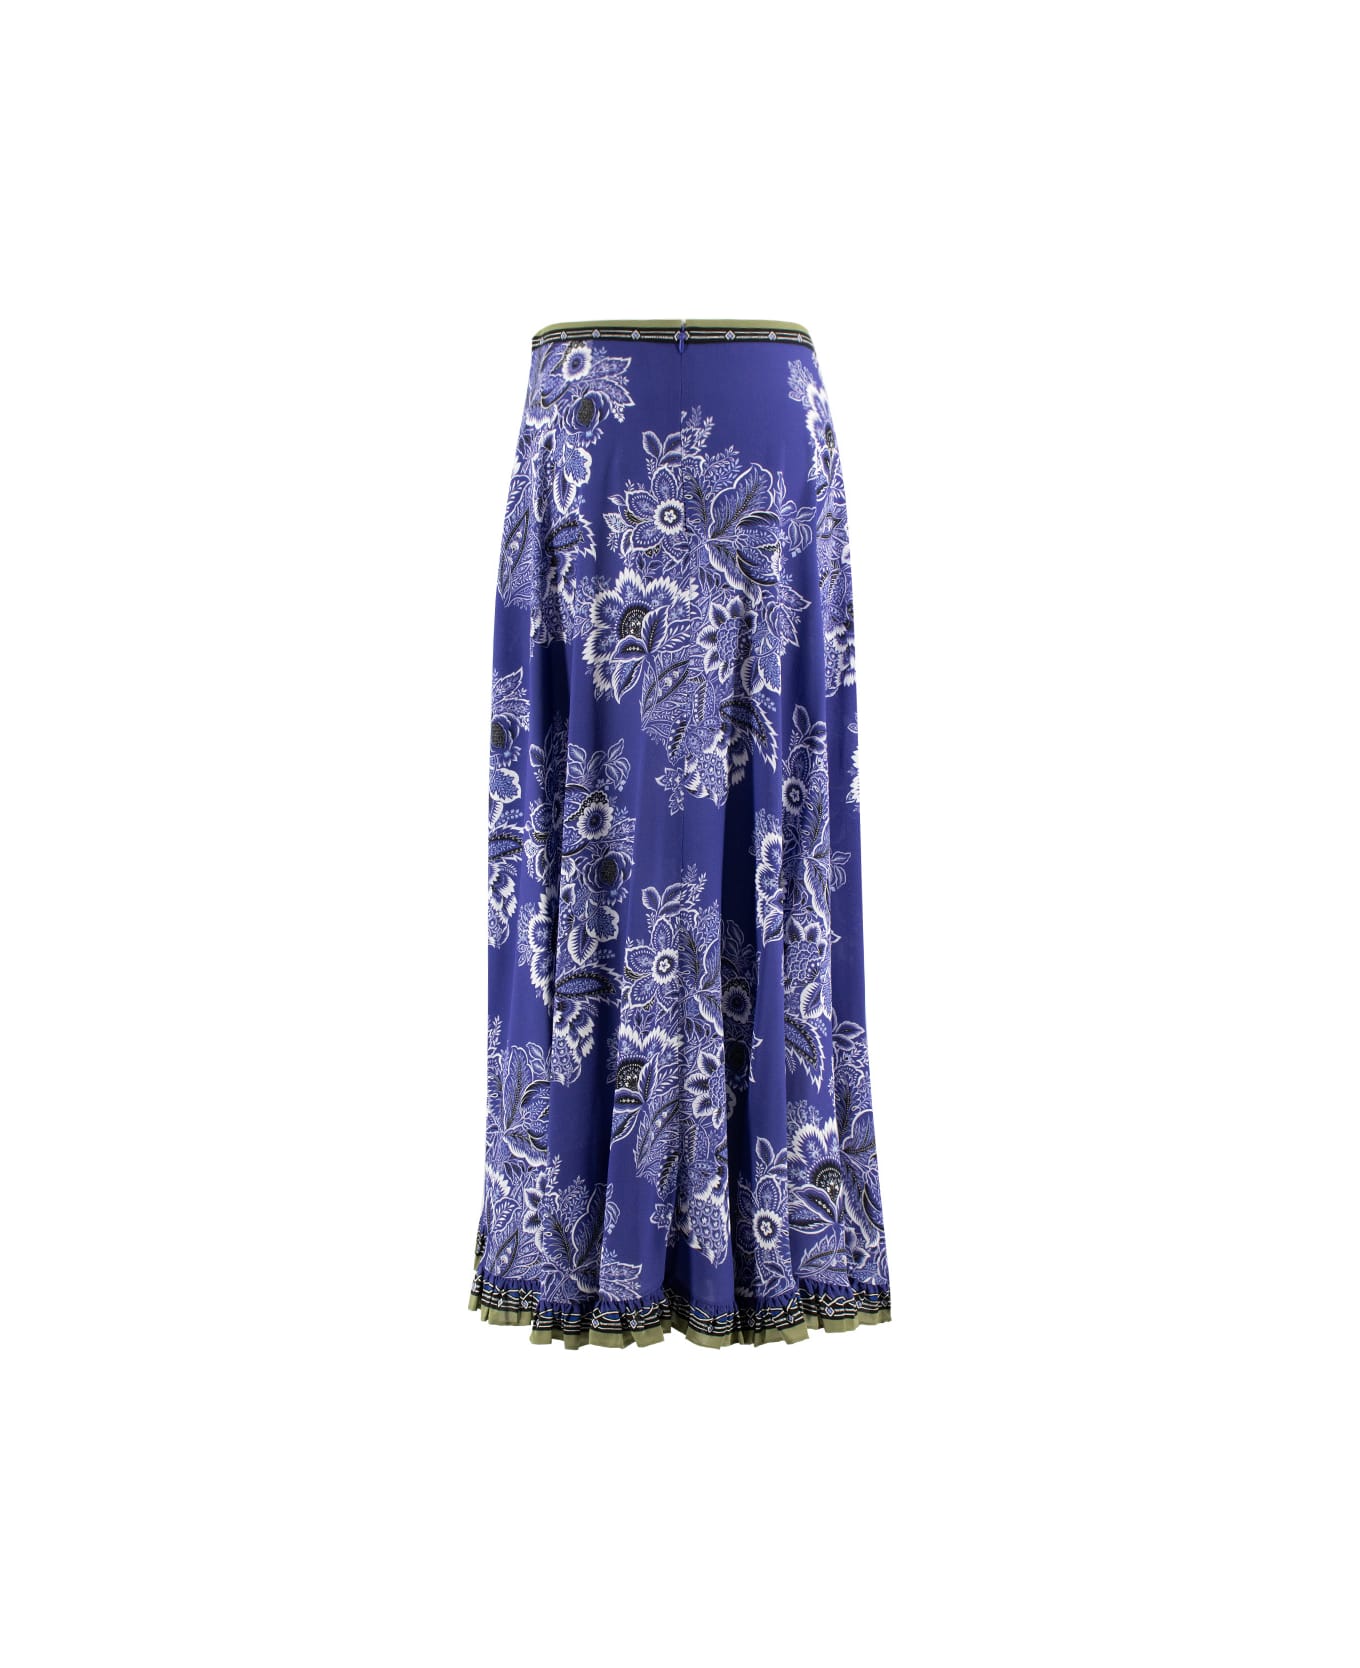 Etro Skirt - PRINT ON BLUE BASE